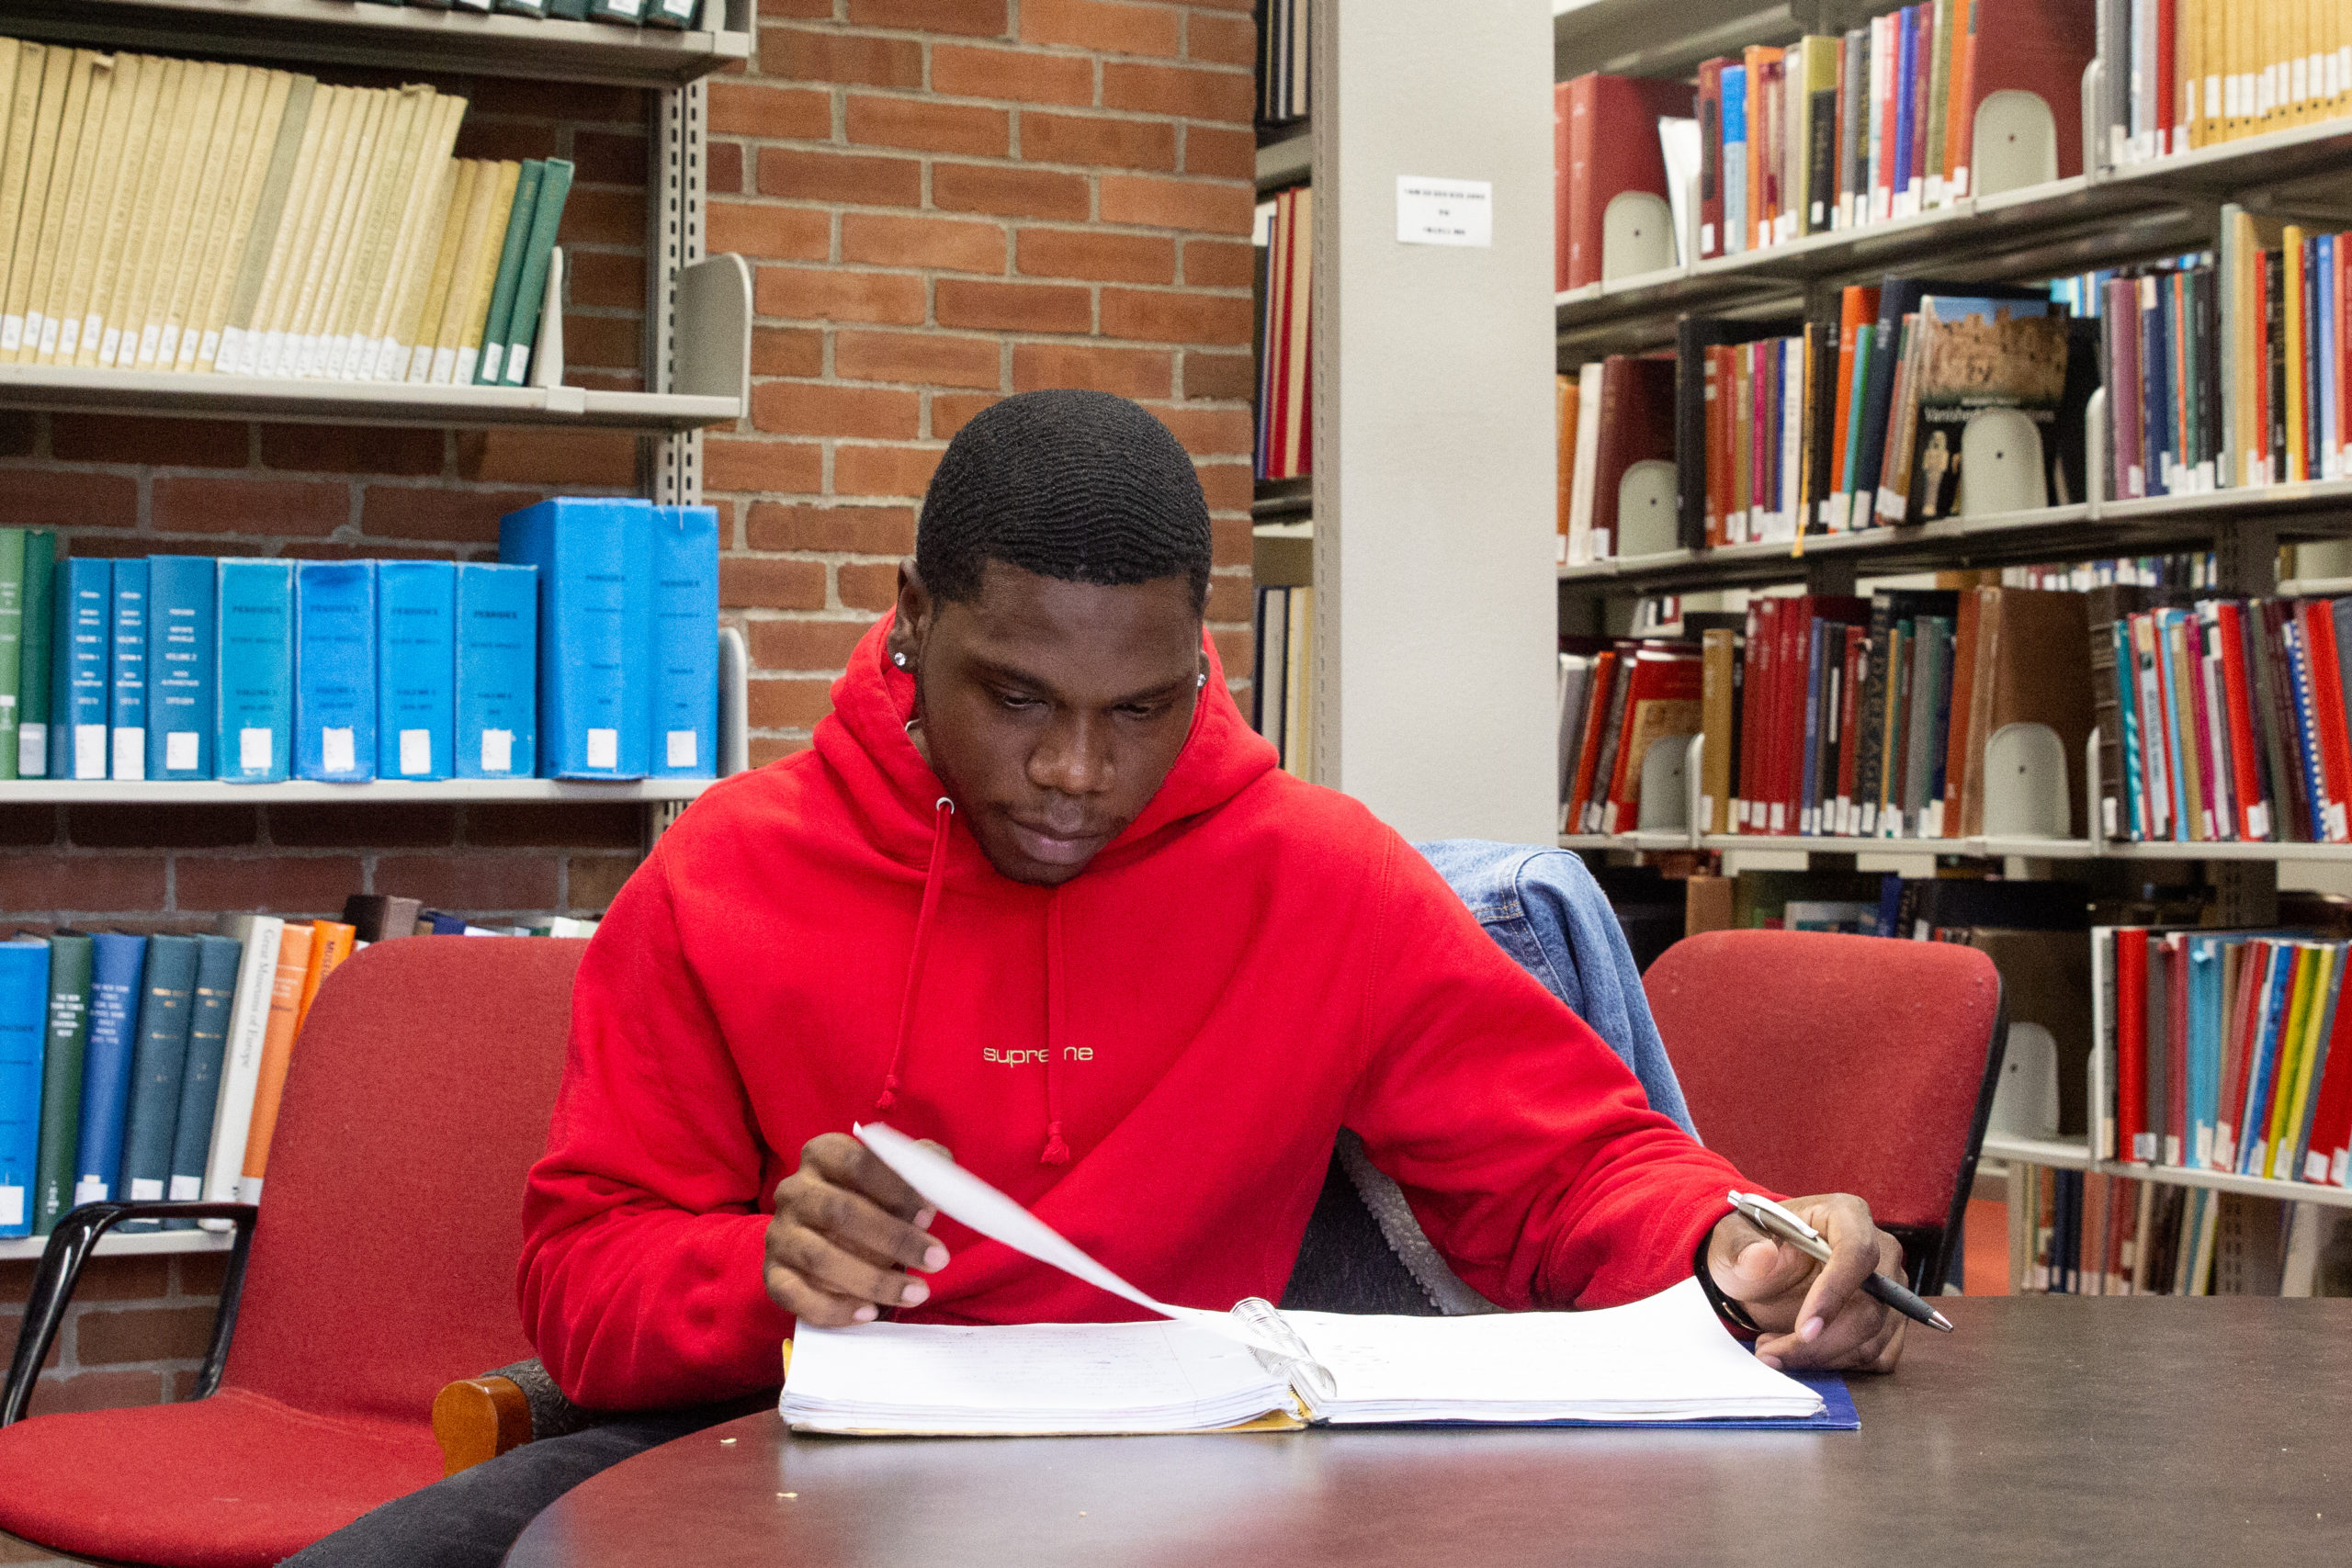 Harlem Children's Zone scholar visit a college library.